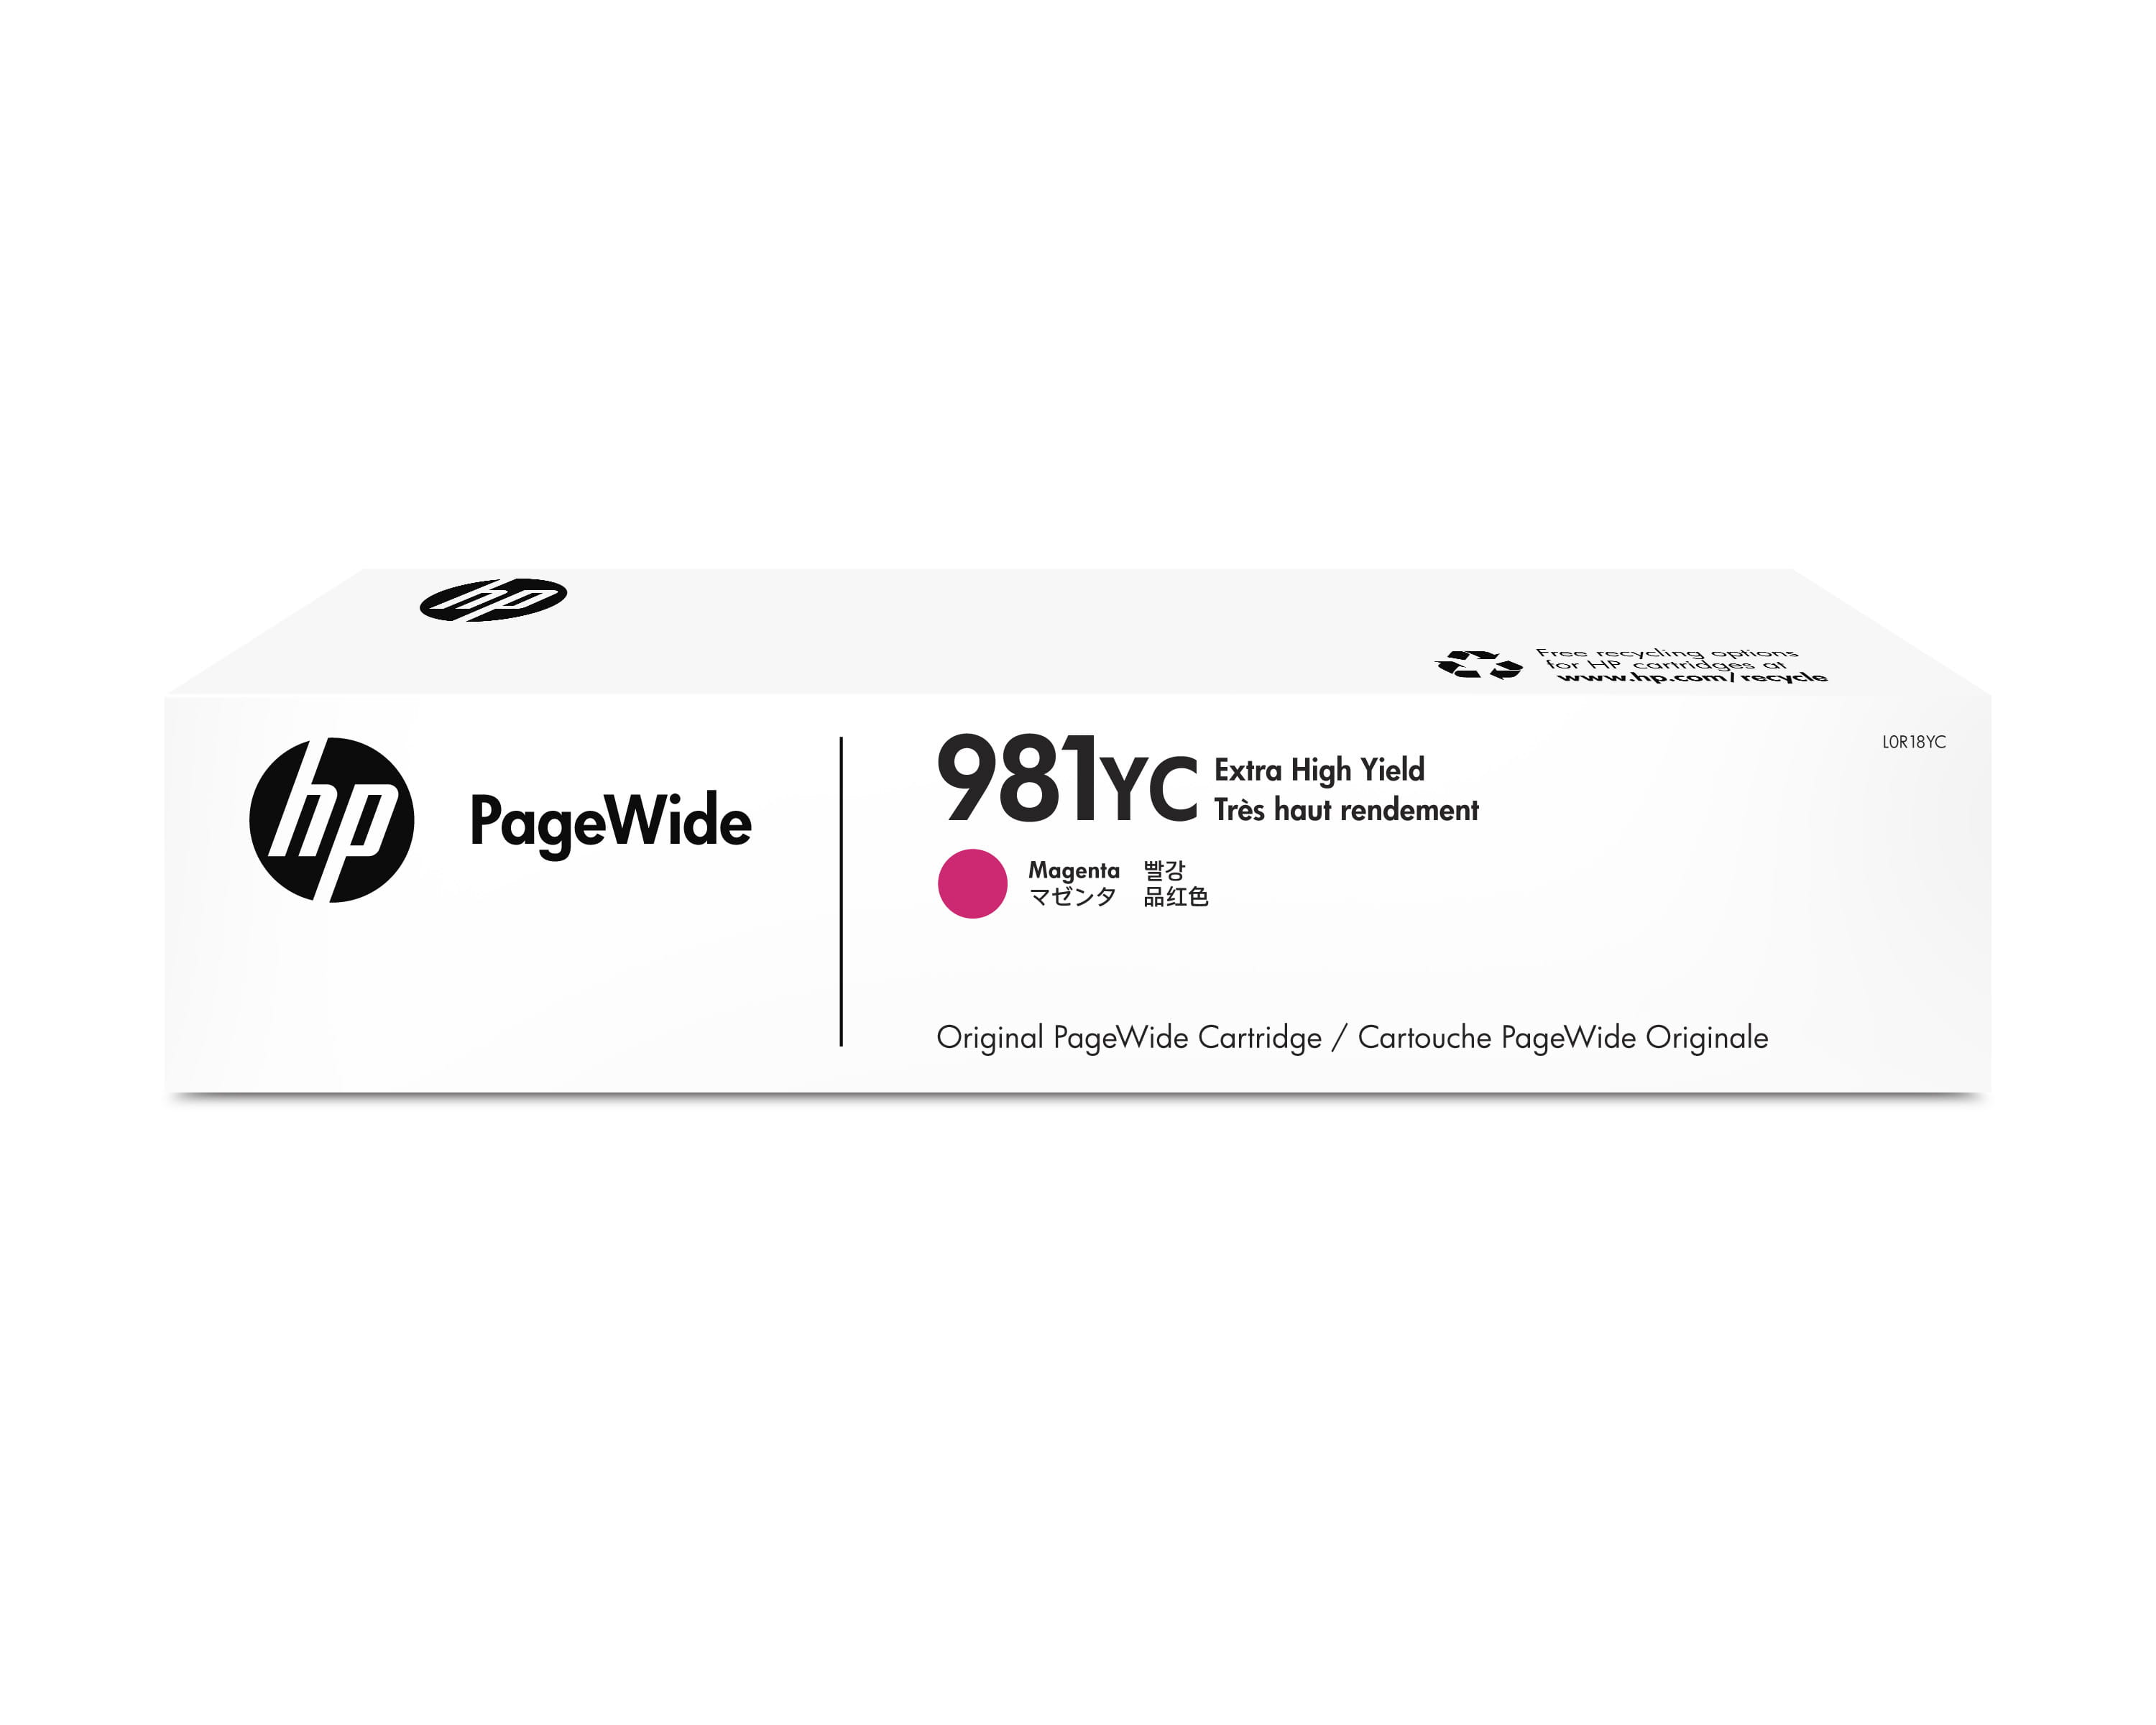 HP 981YC Magenta Contract PageWide Crtg, Original, Tinte auf Pigmentbasis, Magenta, HP, HP PageWide Enterprise Color 556/586, Tintenstrahldrucker